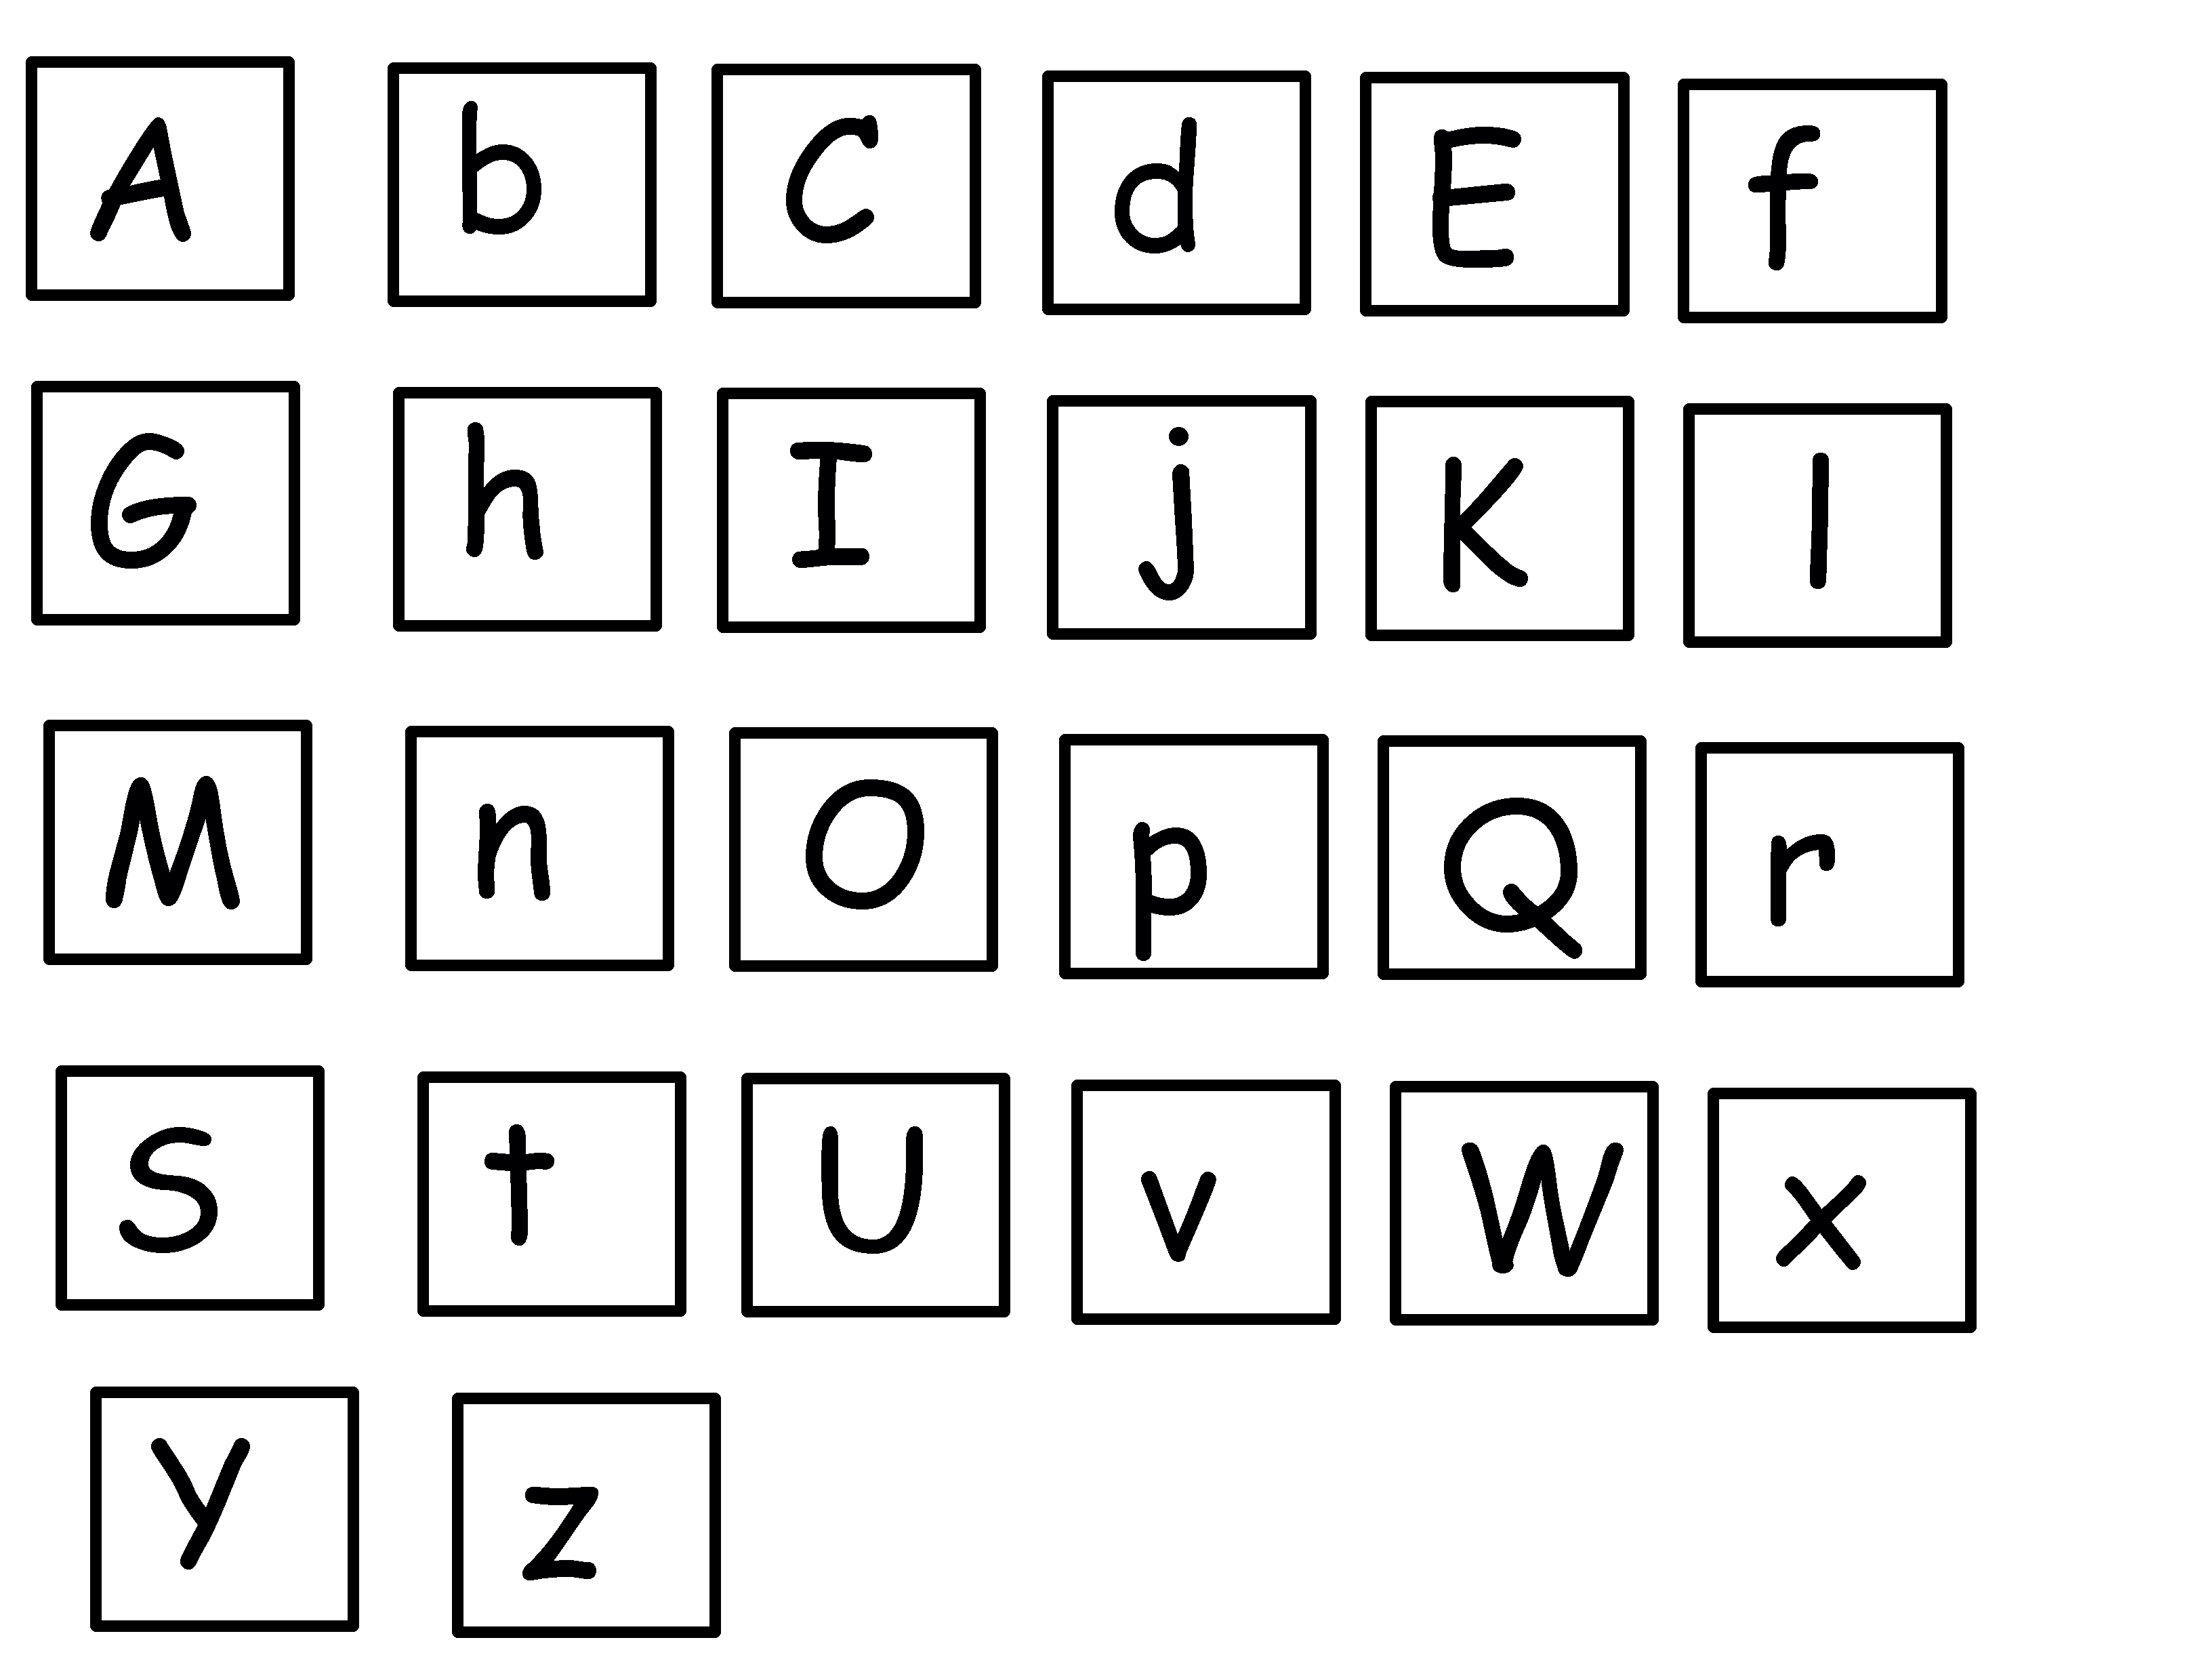 13-best-images-of-alphabet-fun-worksheets-english-alphabet-worksheet